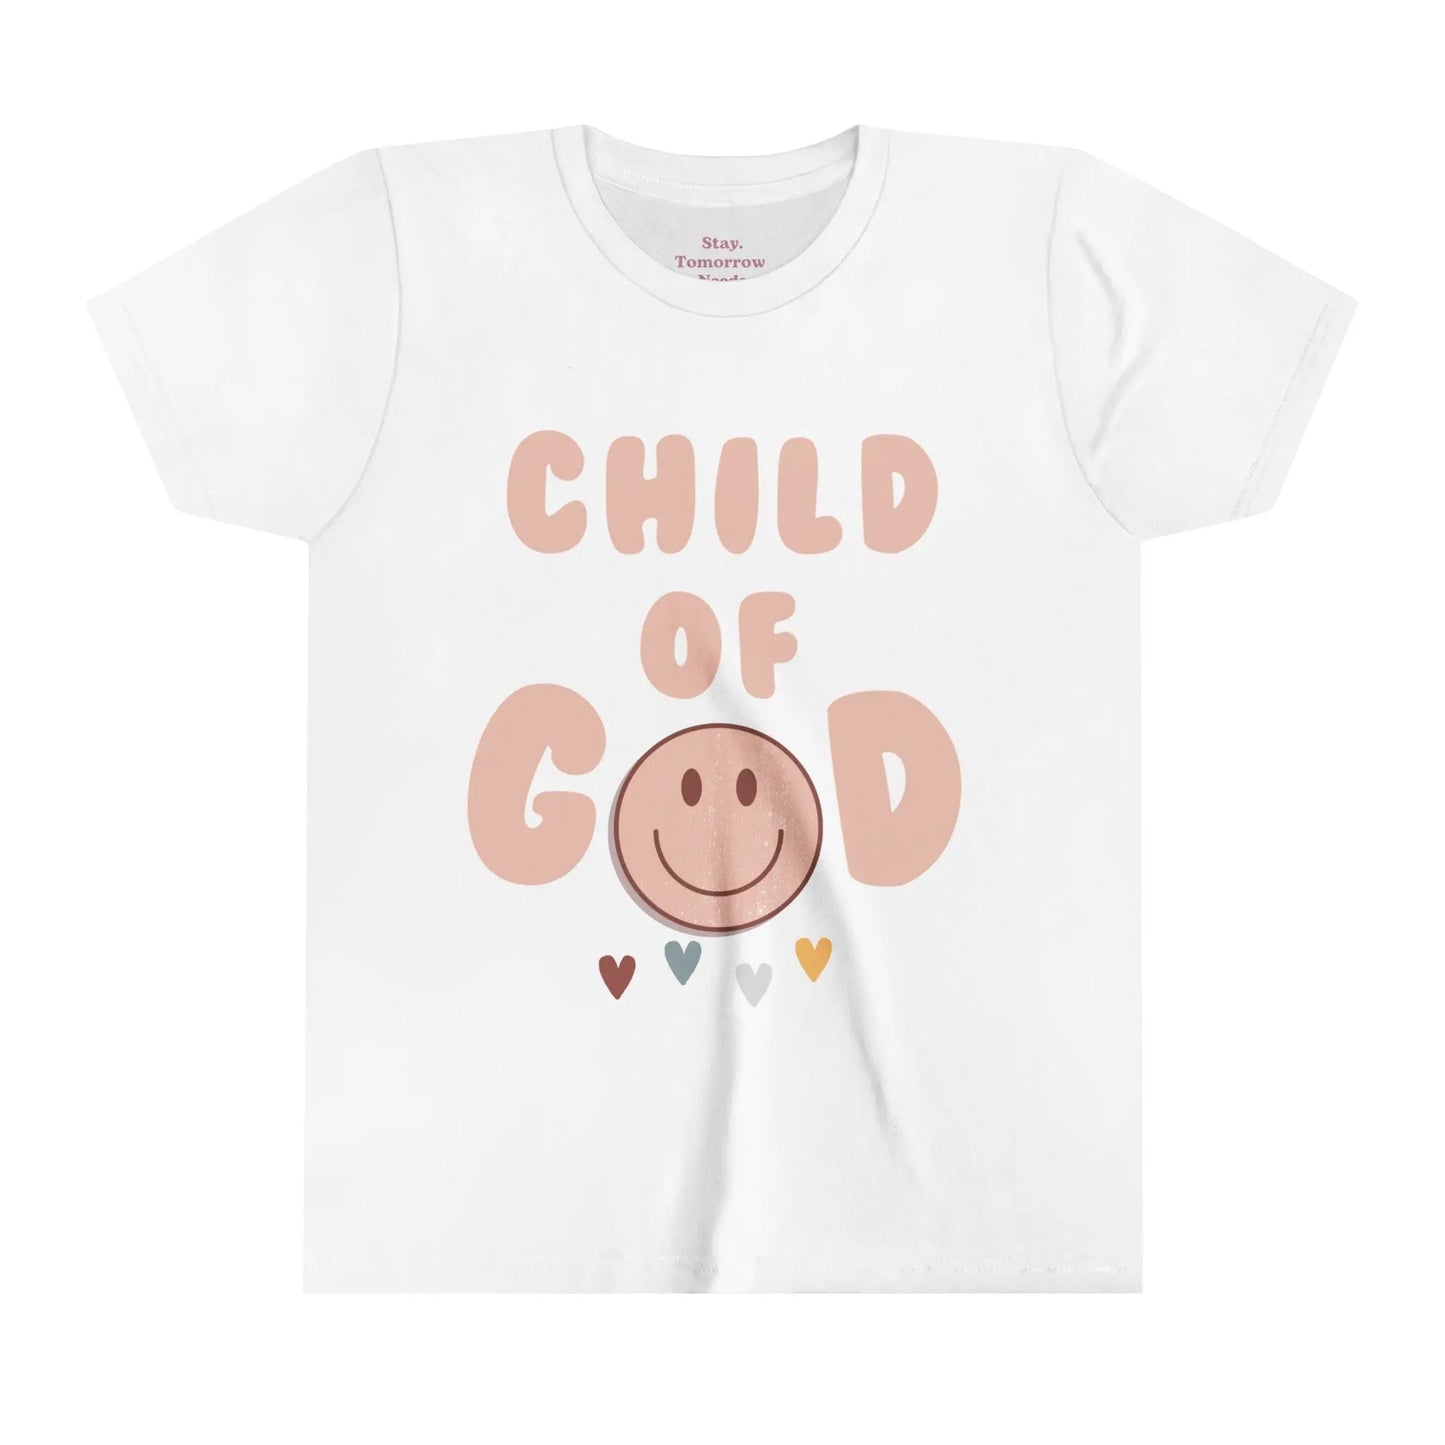 Child of God Girls Christian T shirt retro boho pink Jesus - Stay Tomorrow Needs You Child of God Girls Christian T shirt retro boho pink Jesus